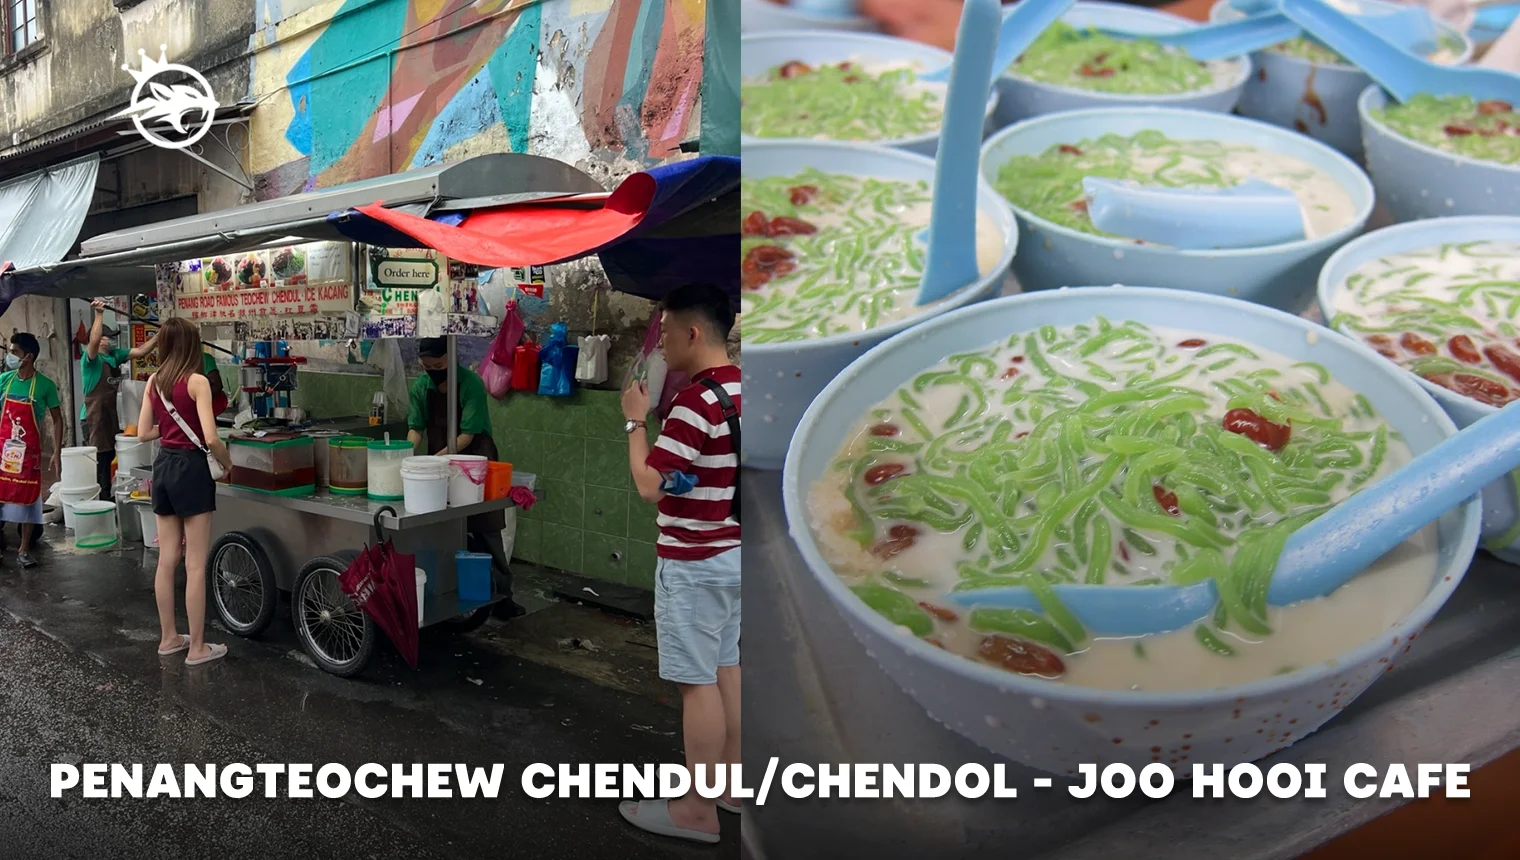 Penang Teochew Chendul-Chendol - Joo Hooi Cafe